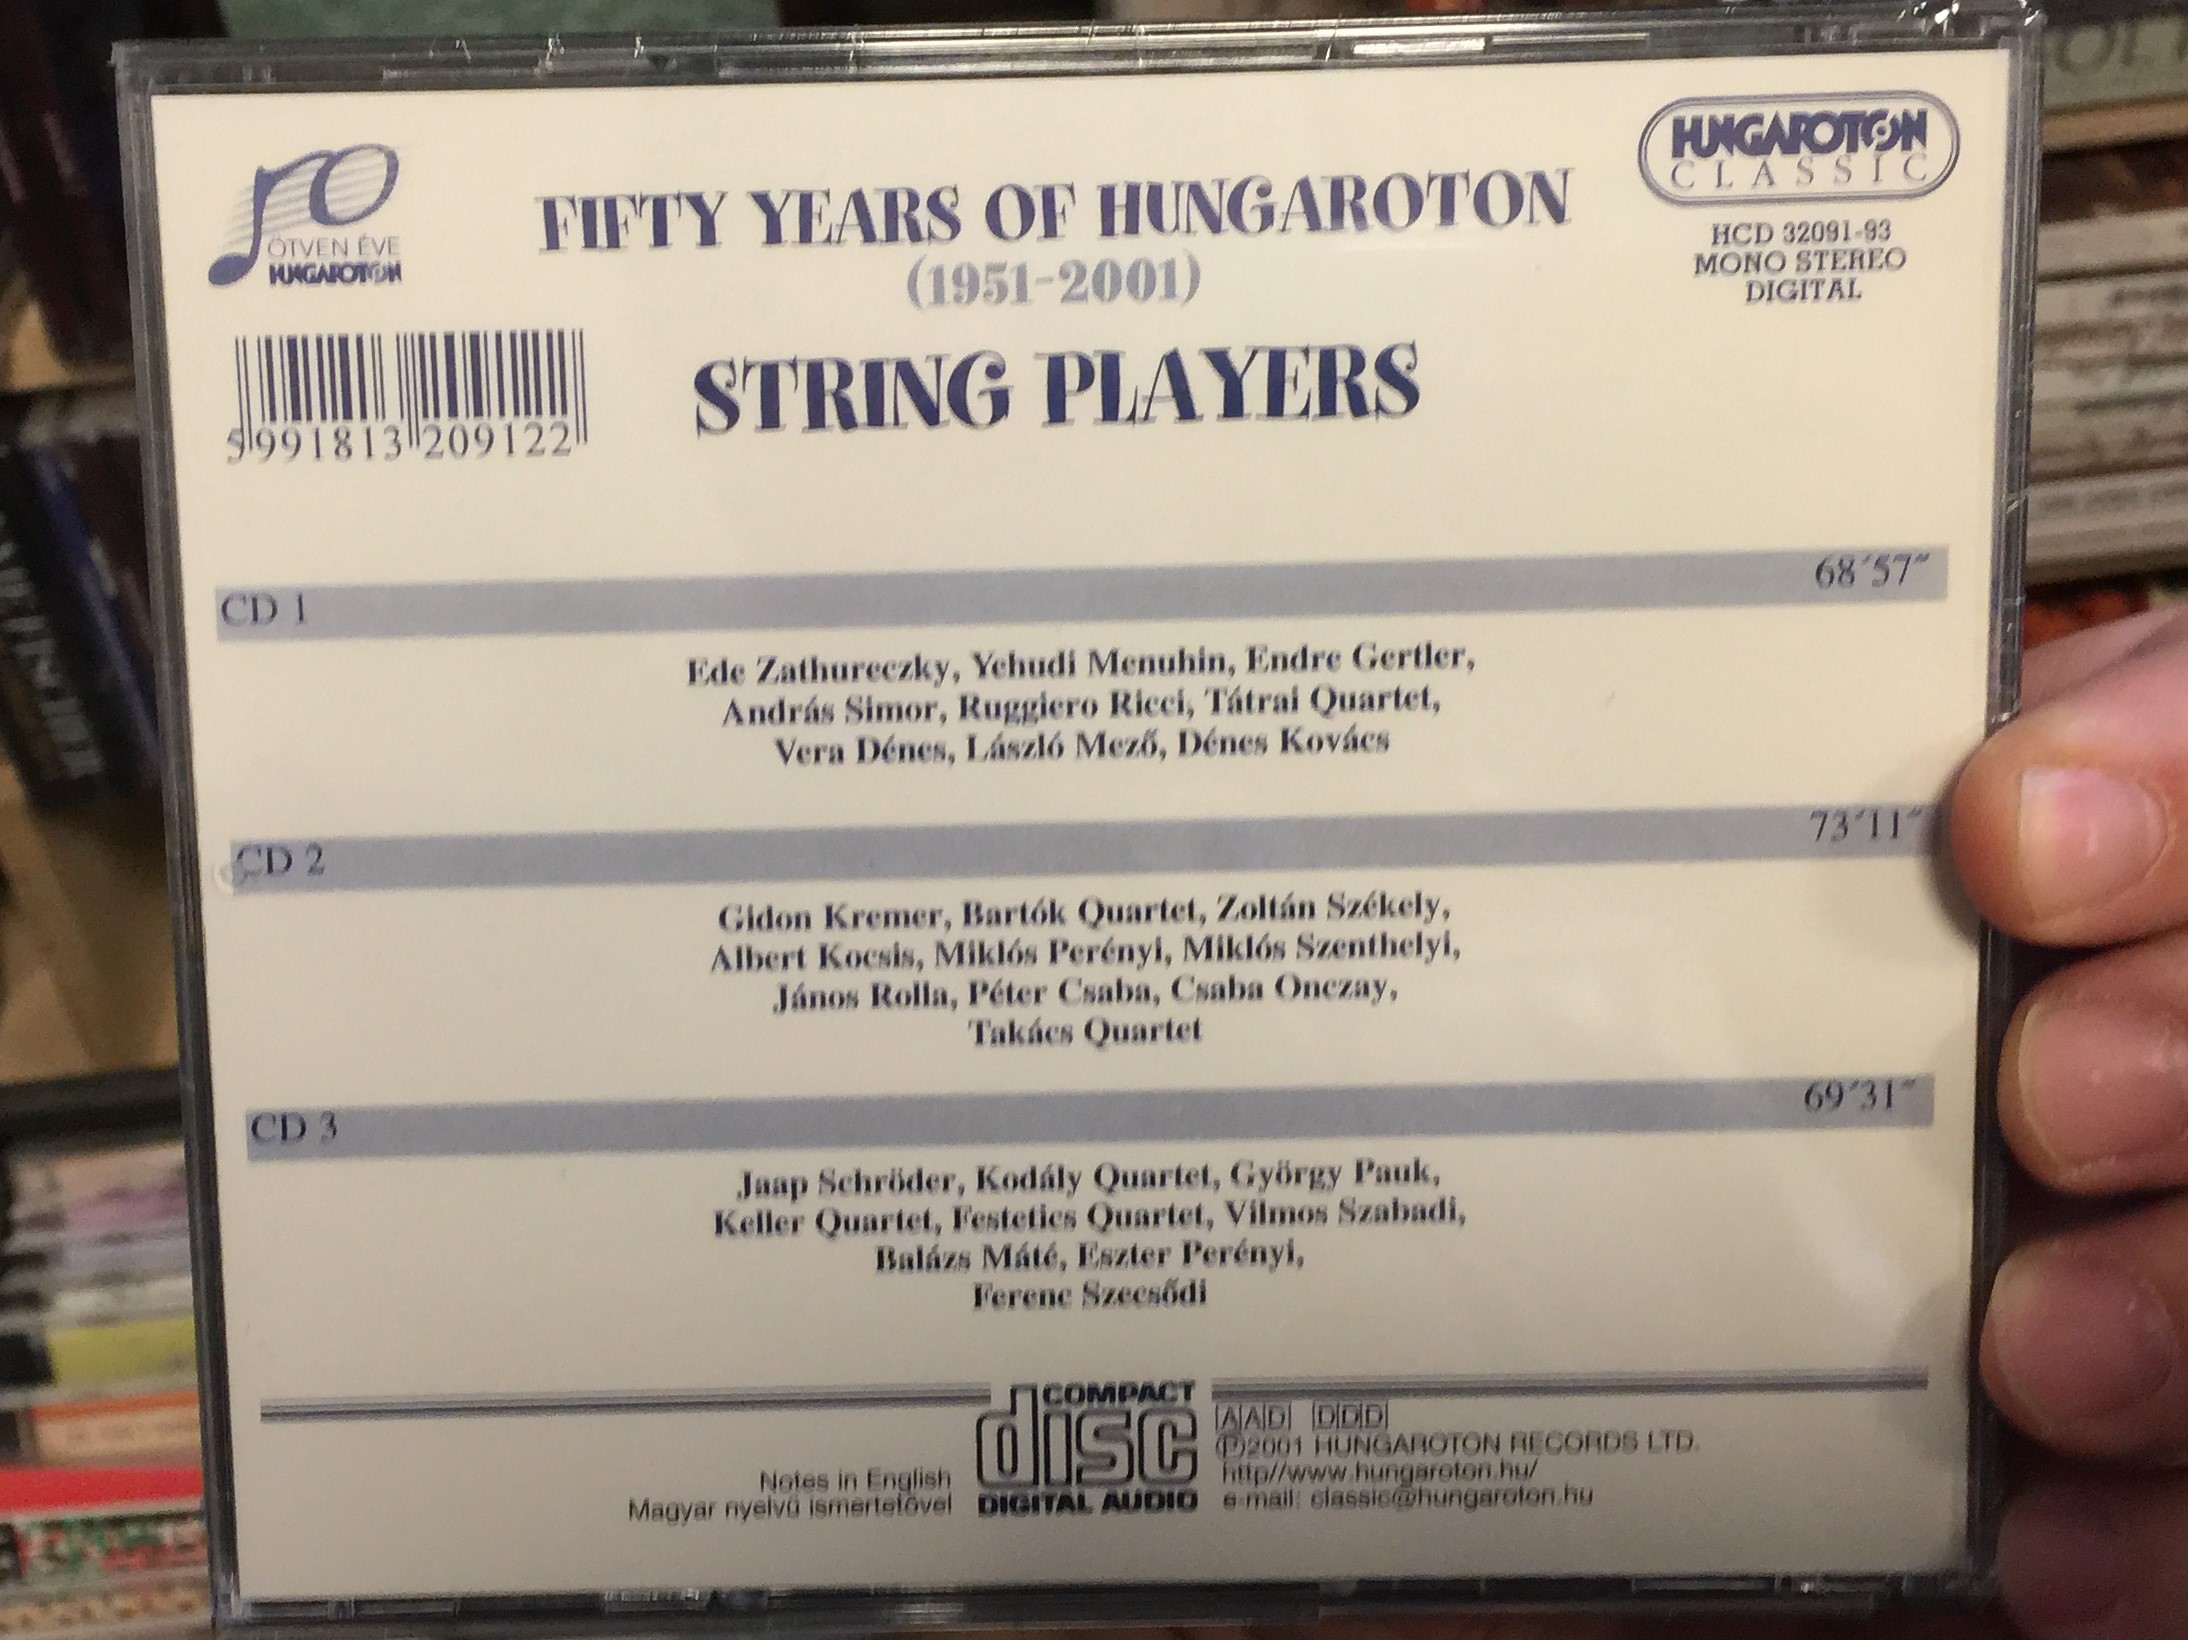 fifty-years-of-hungaroton-1951-2001-string-players-hungaroton-classic-3x-audio-cd-2001-mono-stereo-hcd-32091-93-2-.jpg